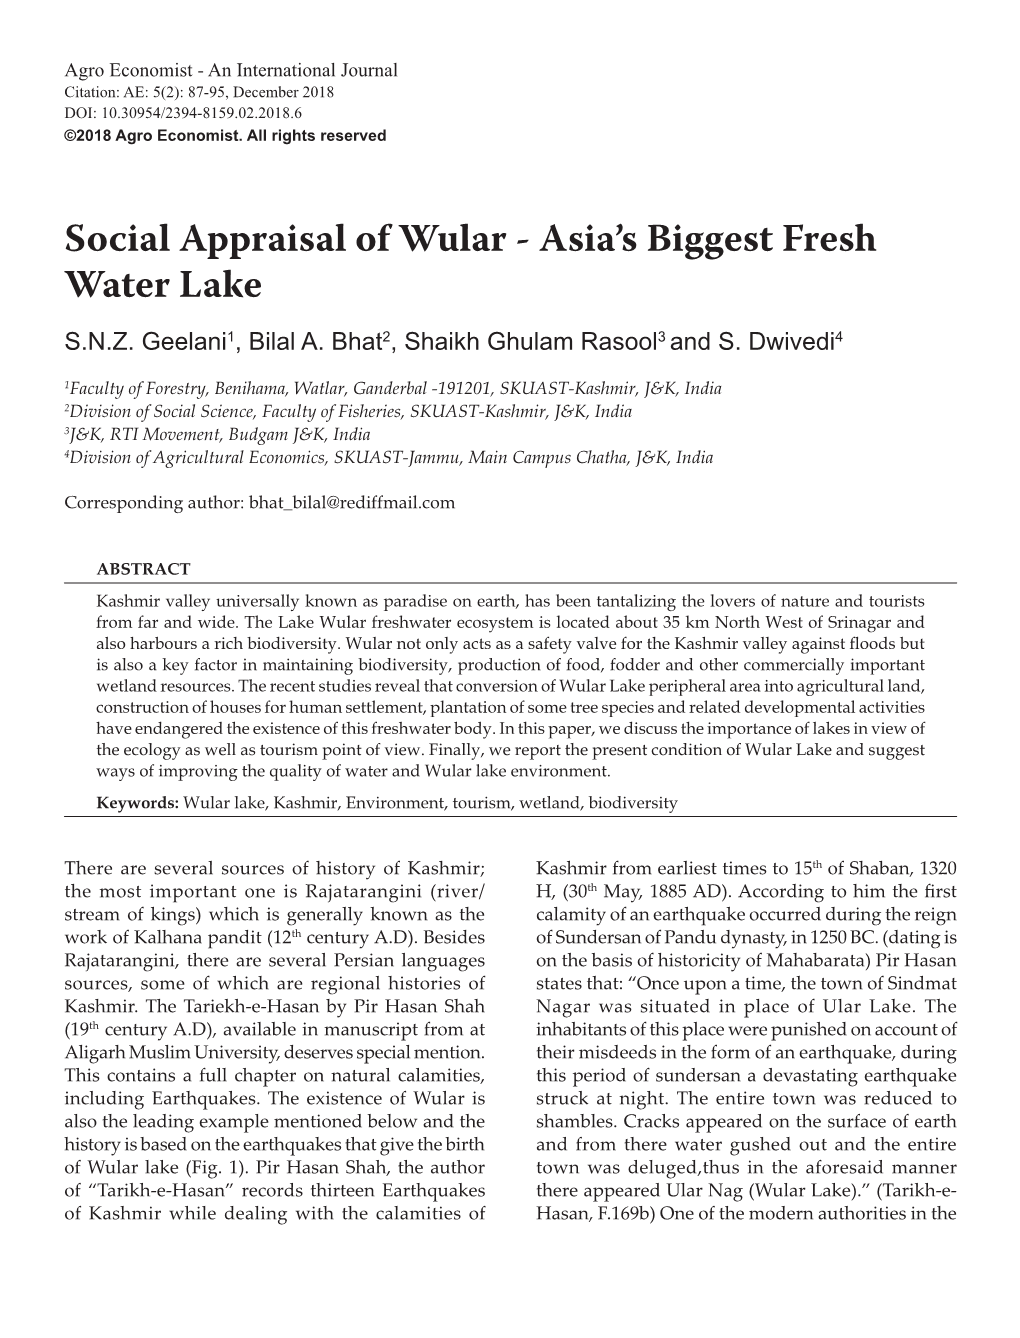 Social Appraisal of Wular - Asia’S Biggest Fresh Water Lake S.N.Z